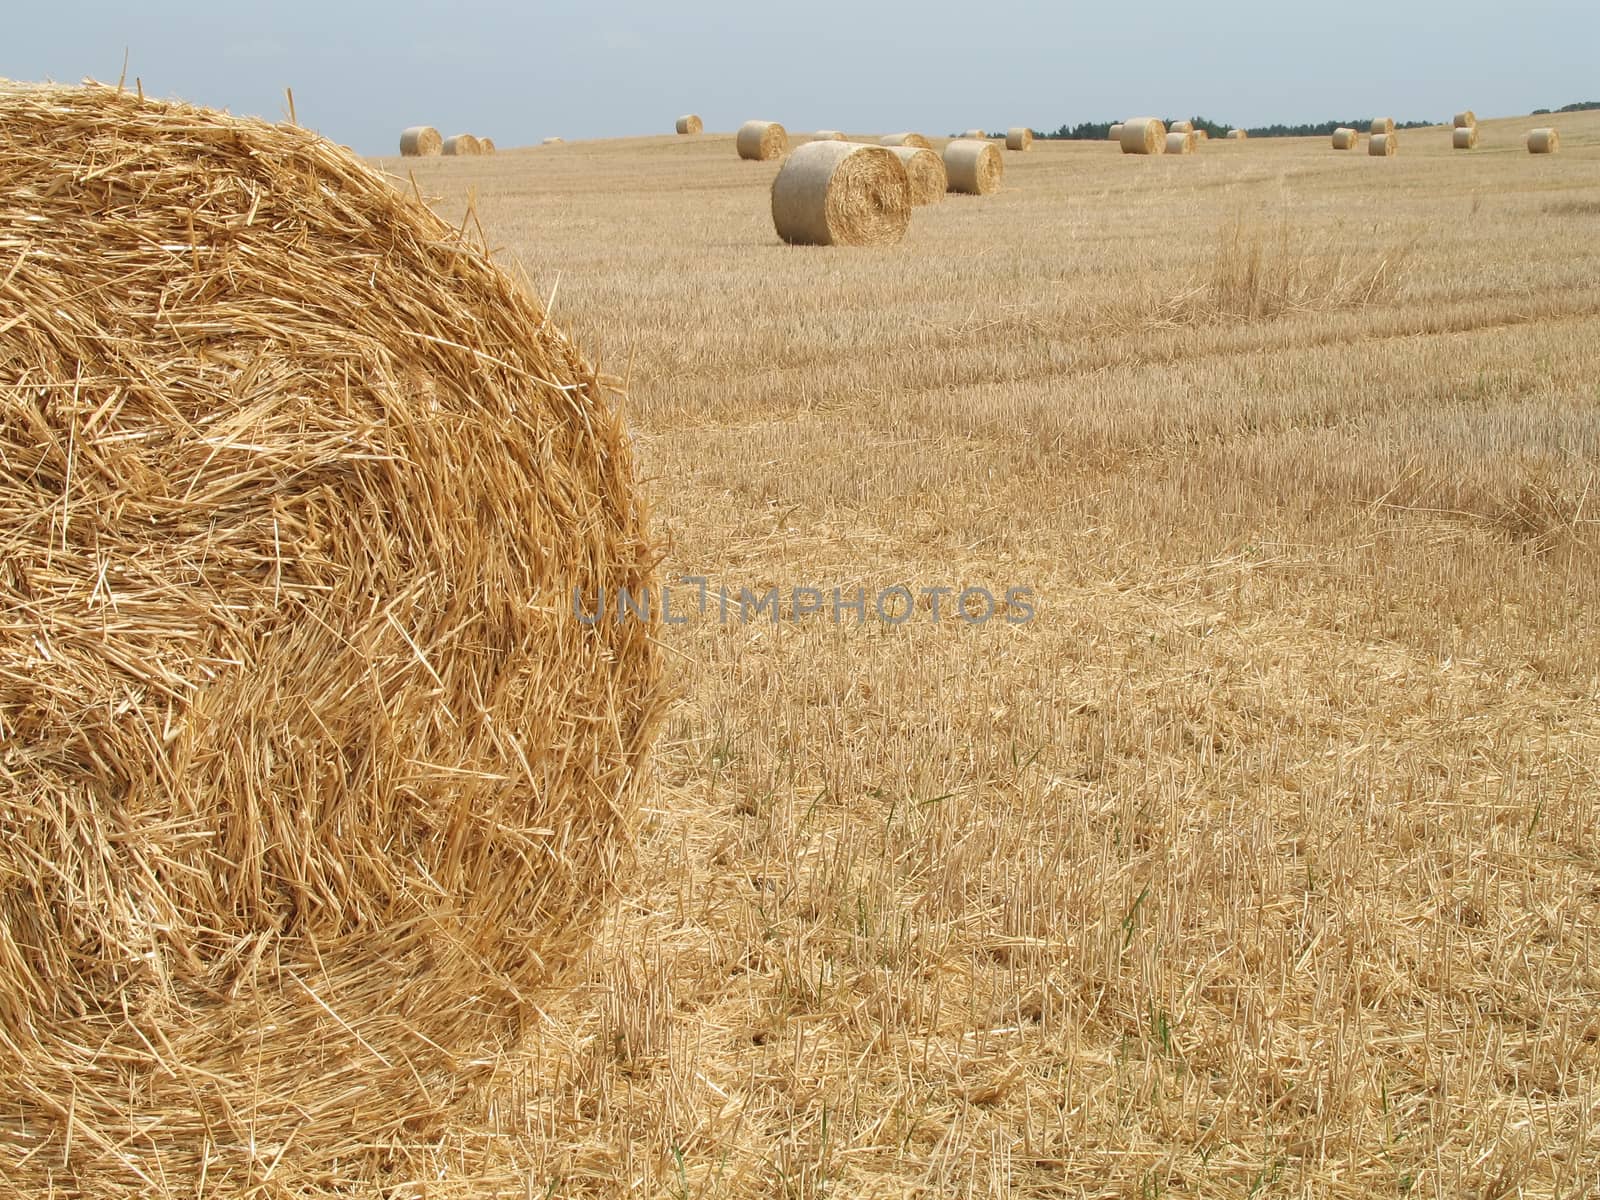 Round bales of straw on a field in Brandenburg, Germany.